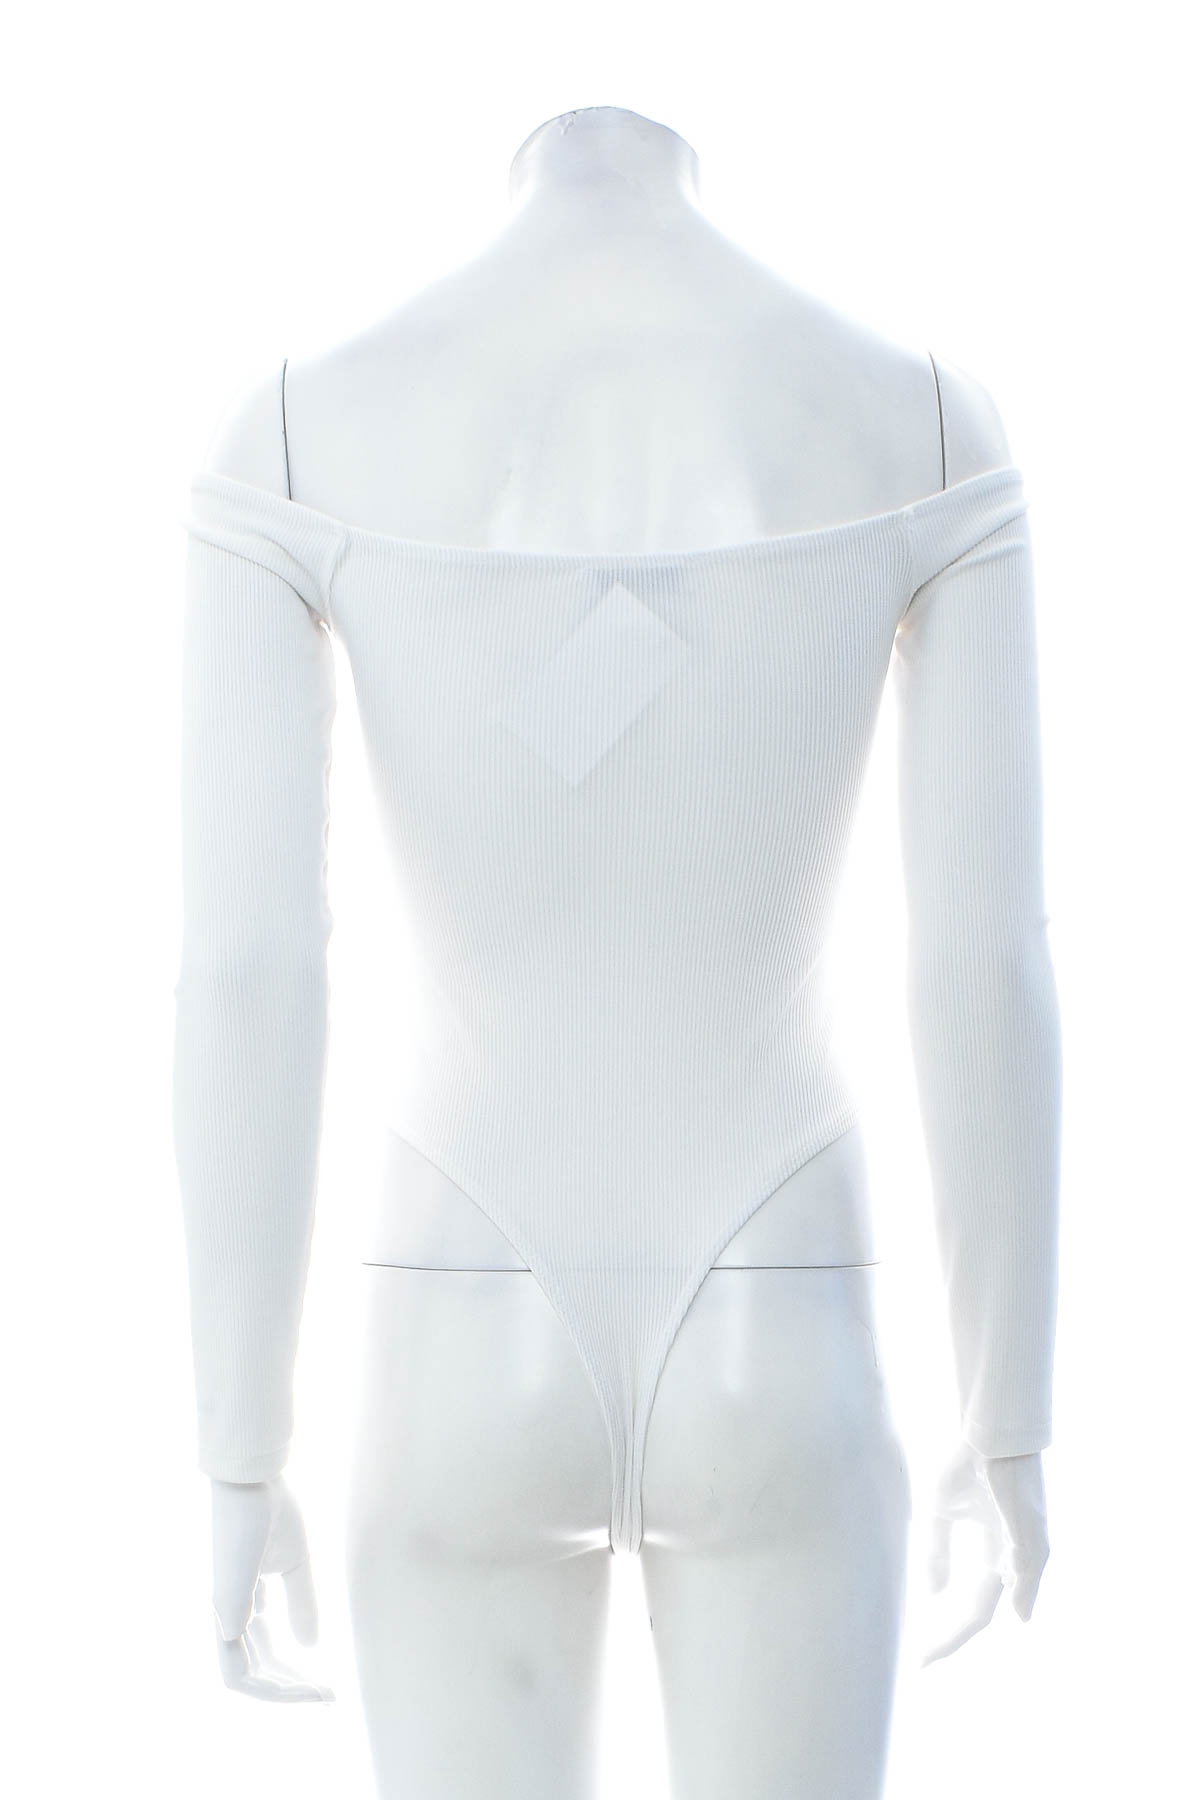 Woman's bodysuit - Bershka - 1